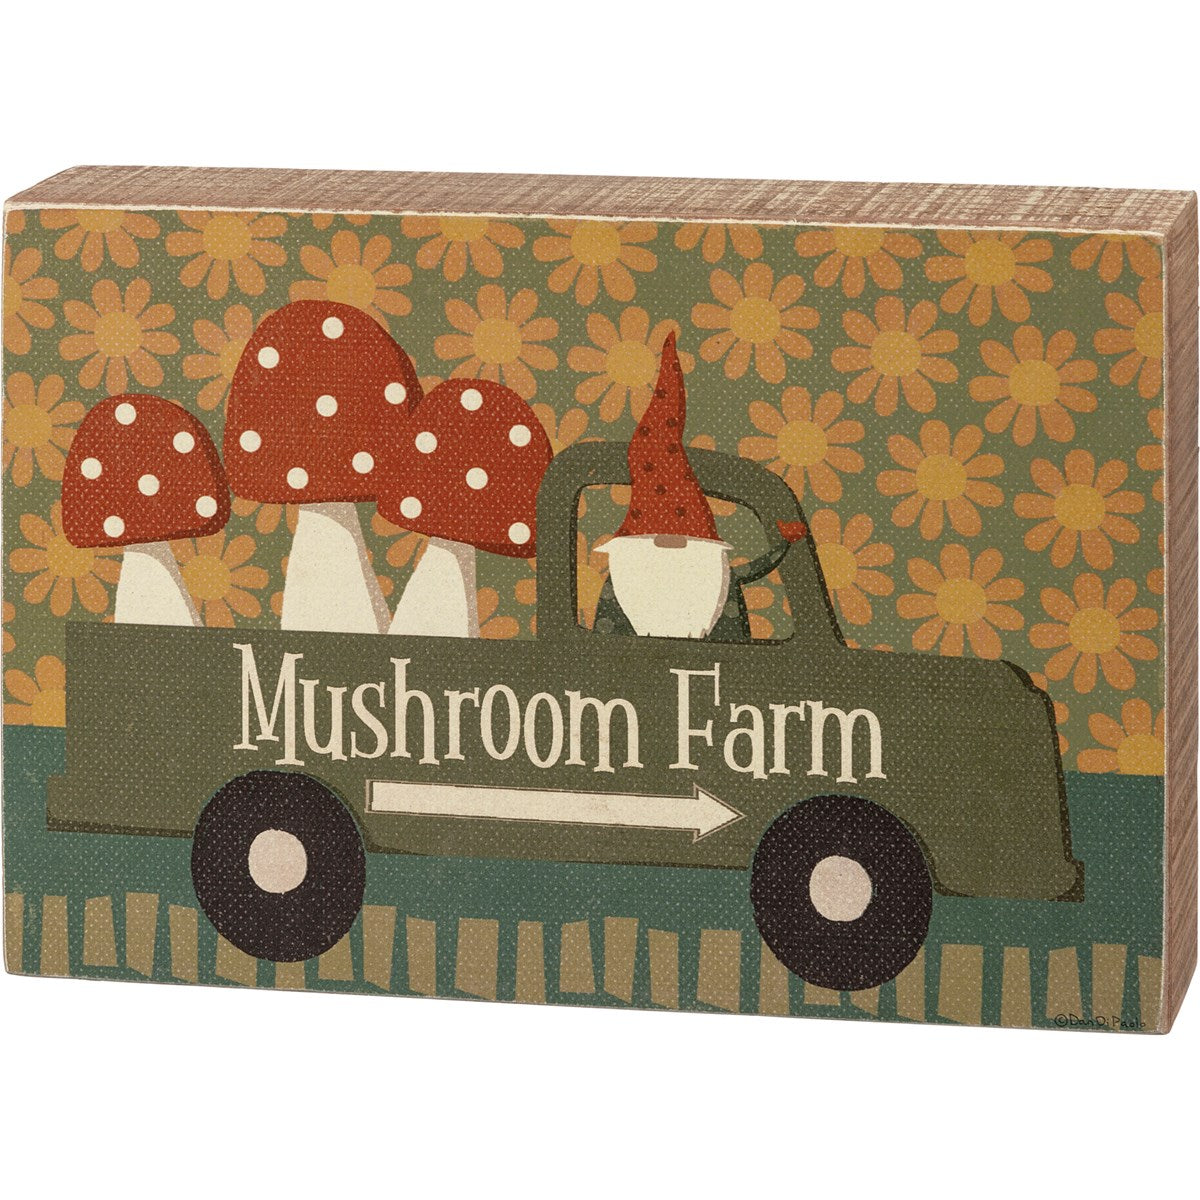 Mushroom farm gnome